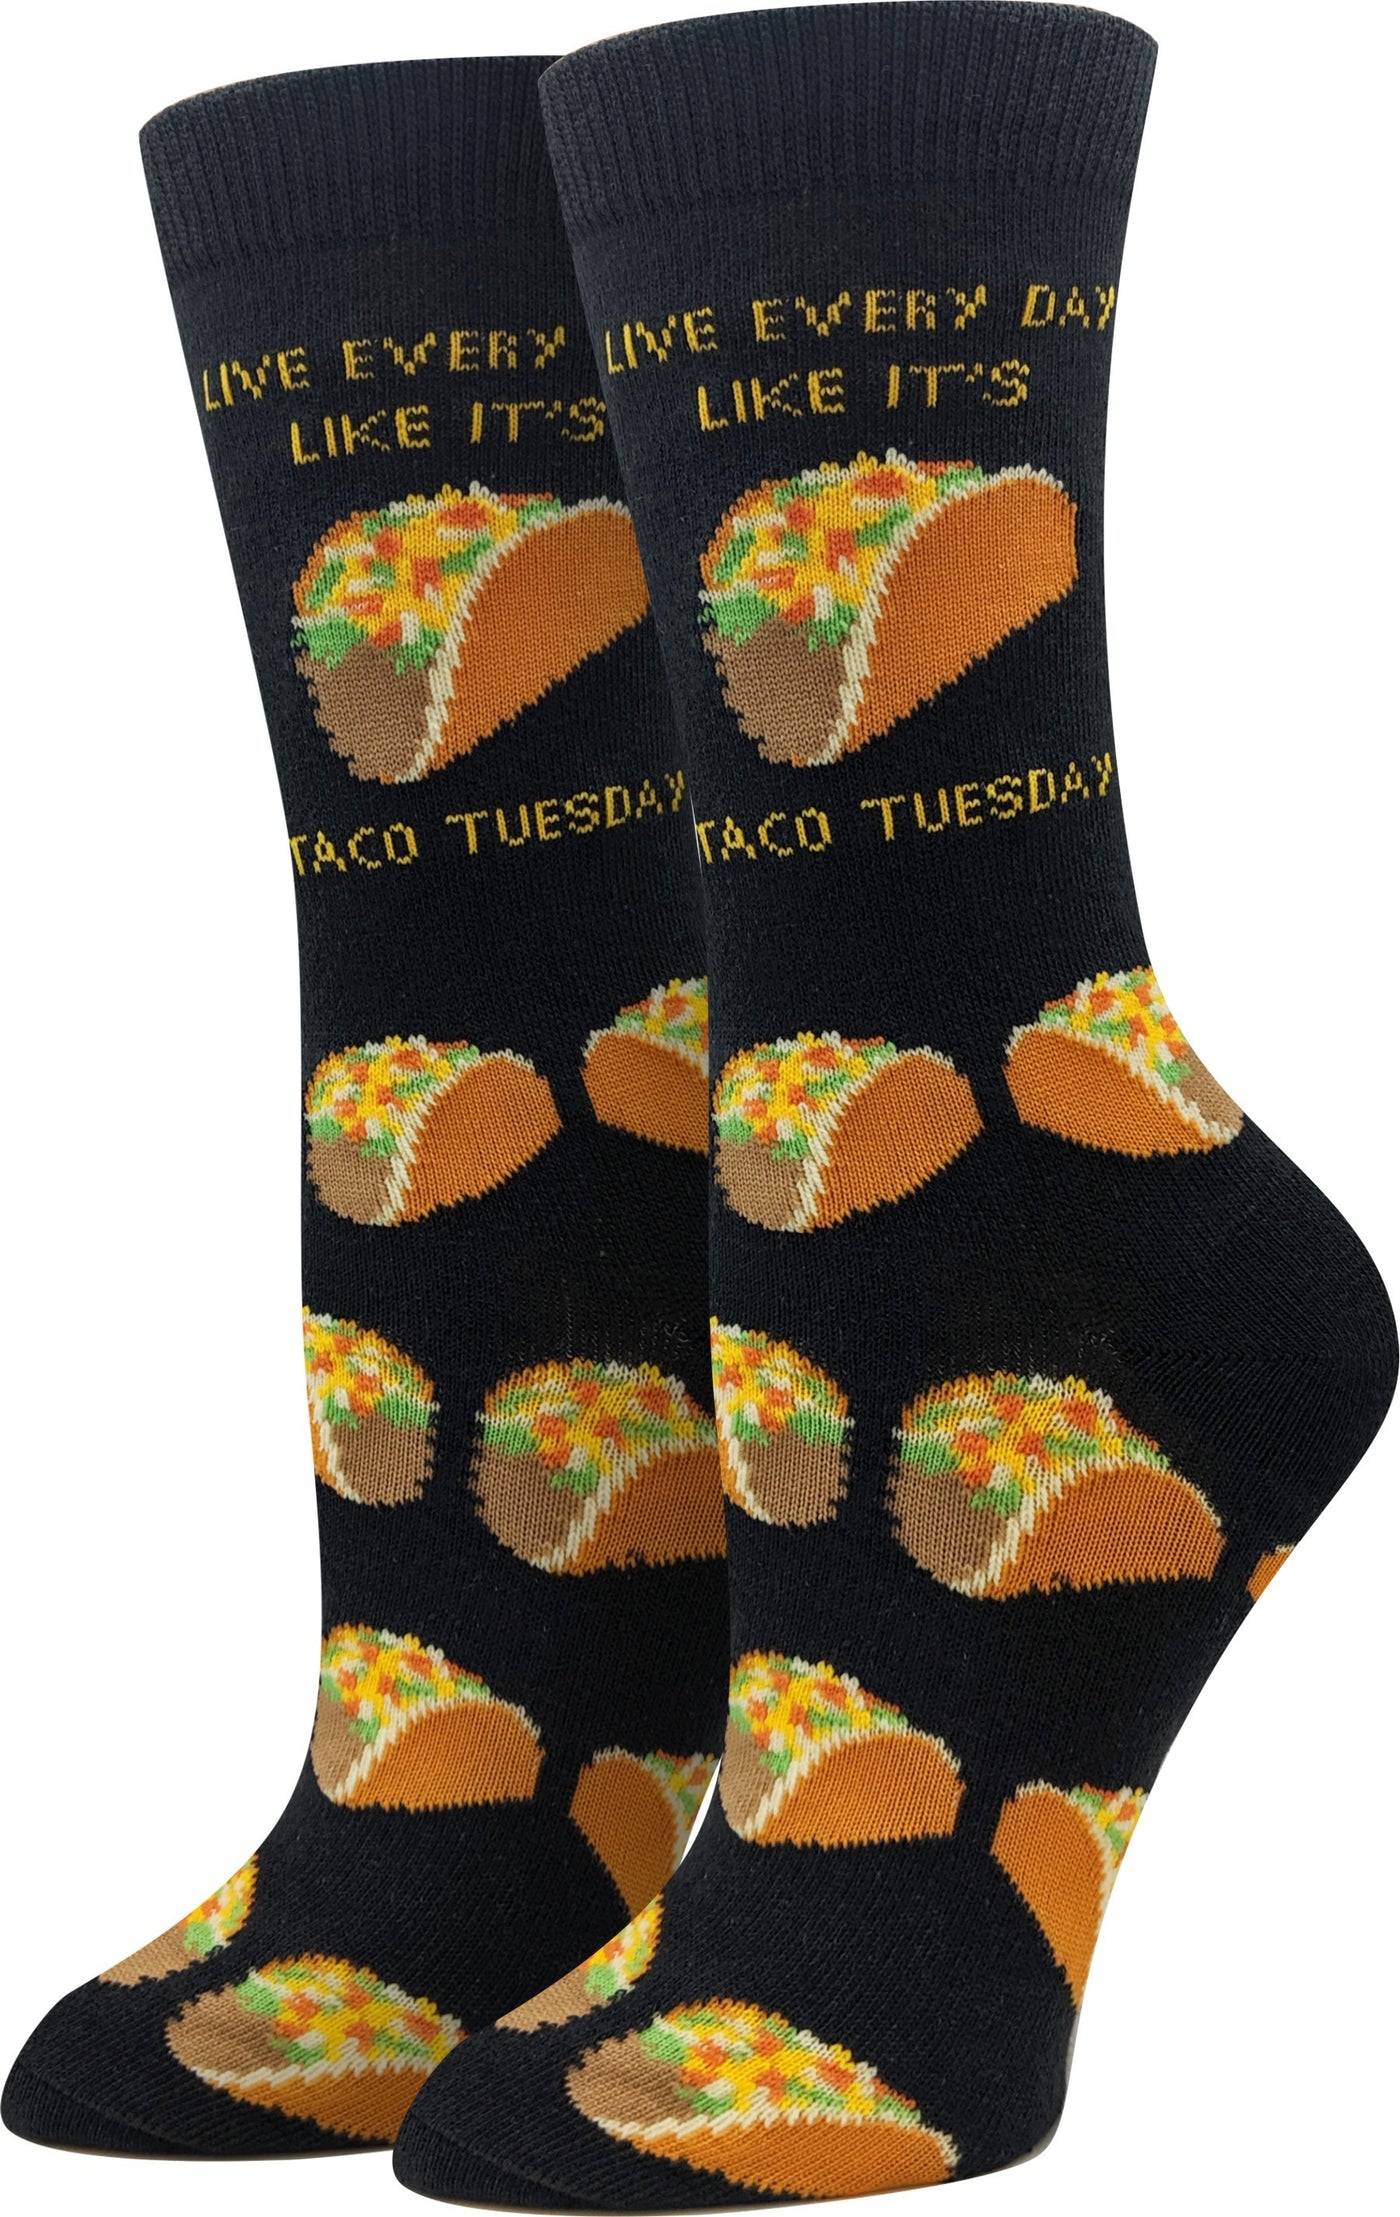 Ladies Taco Tuesday Socks